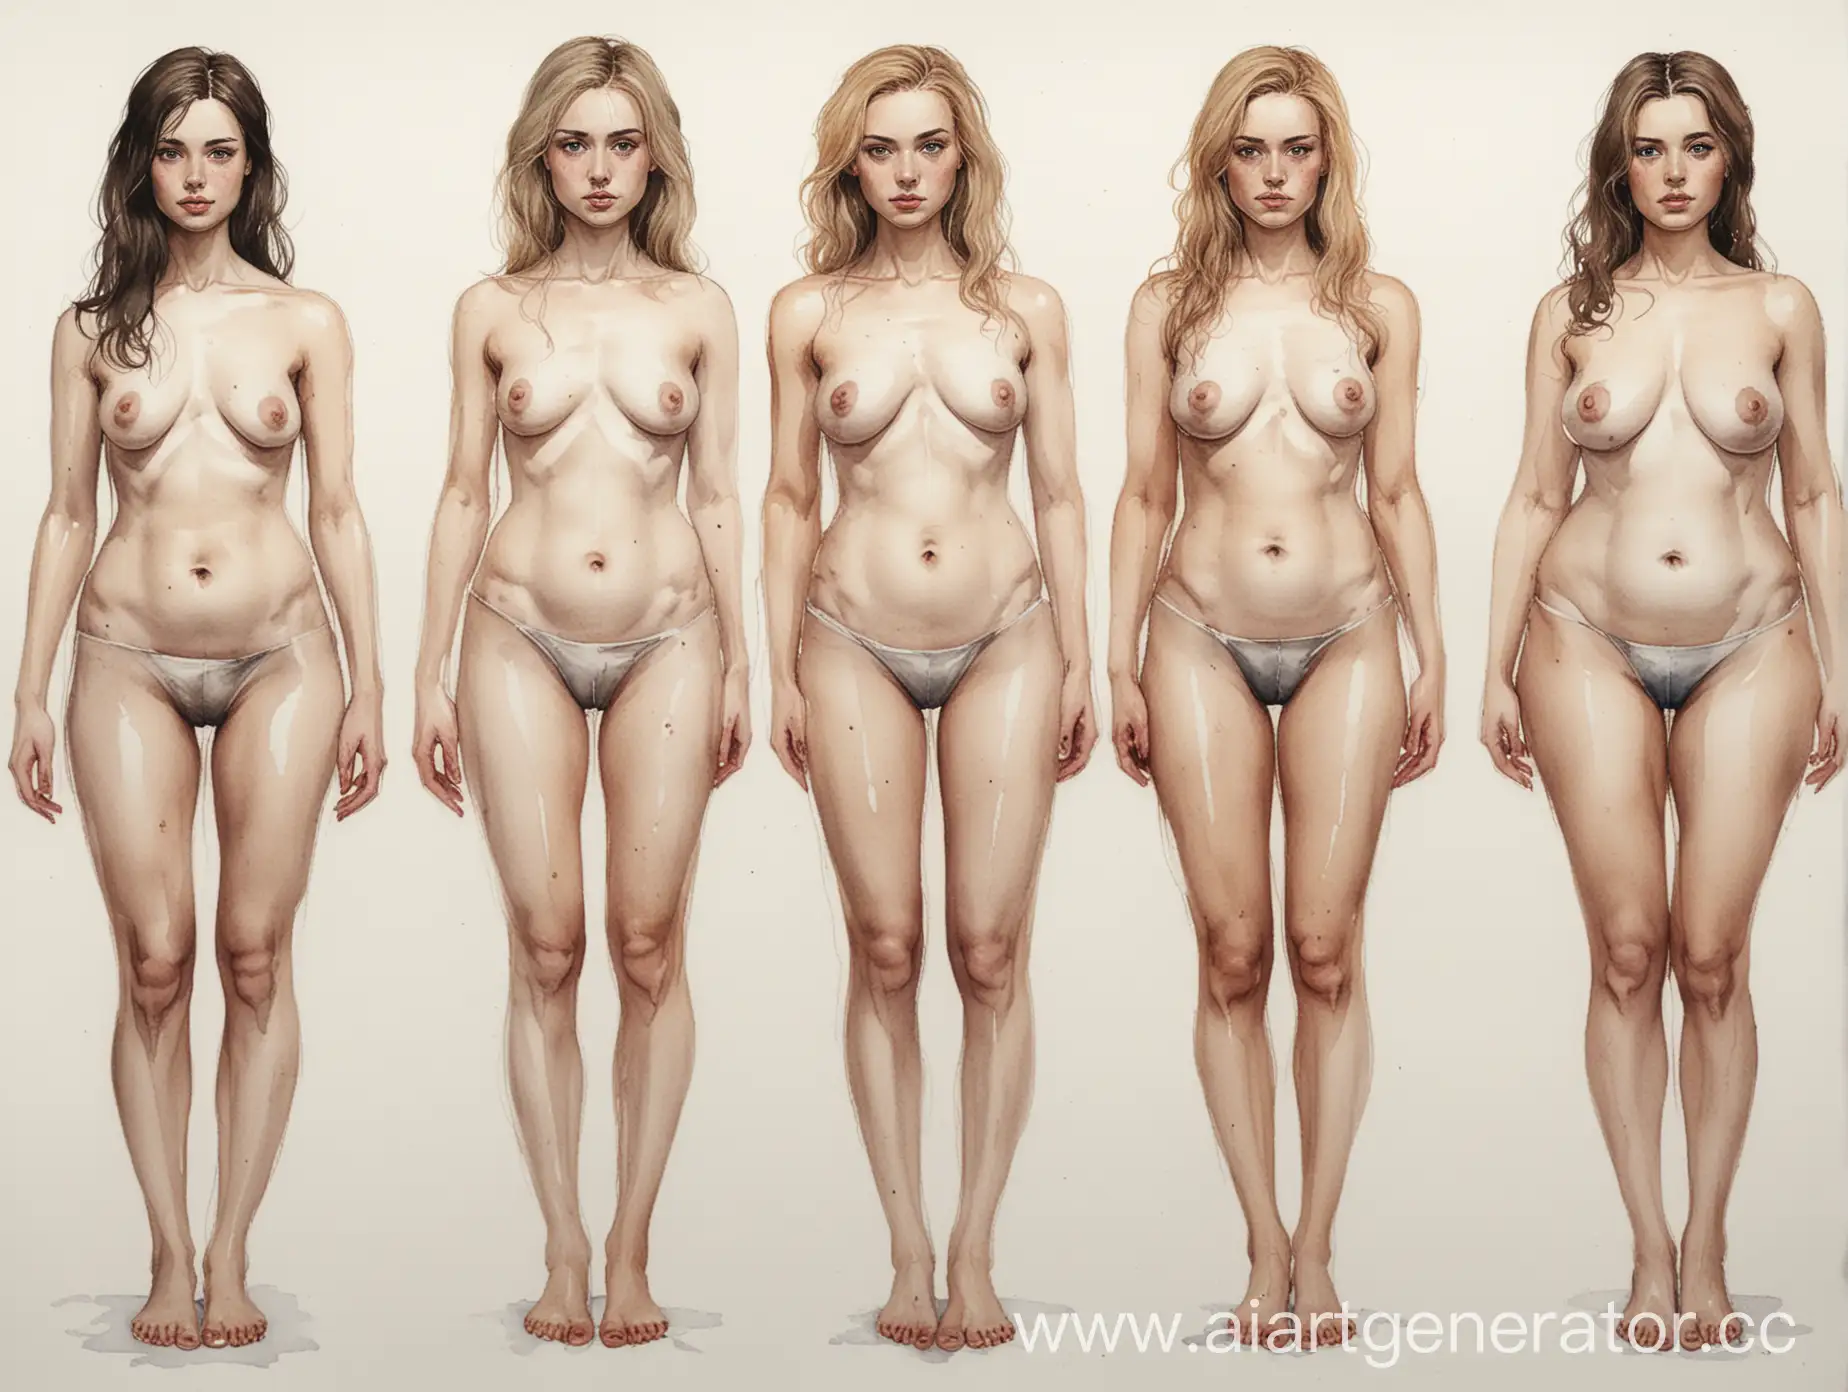 Aquarelle-Portrait-of-Three-Women-Representing-Different-Body-Types